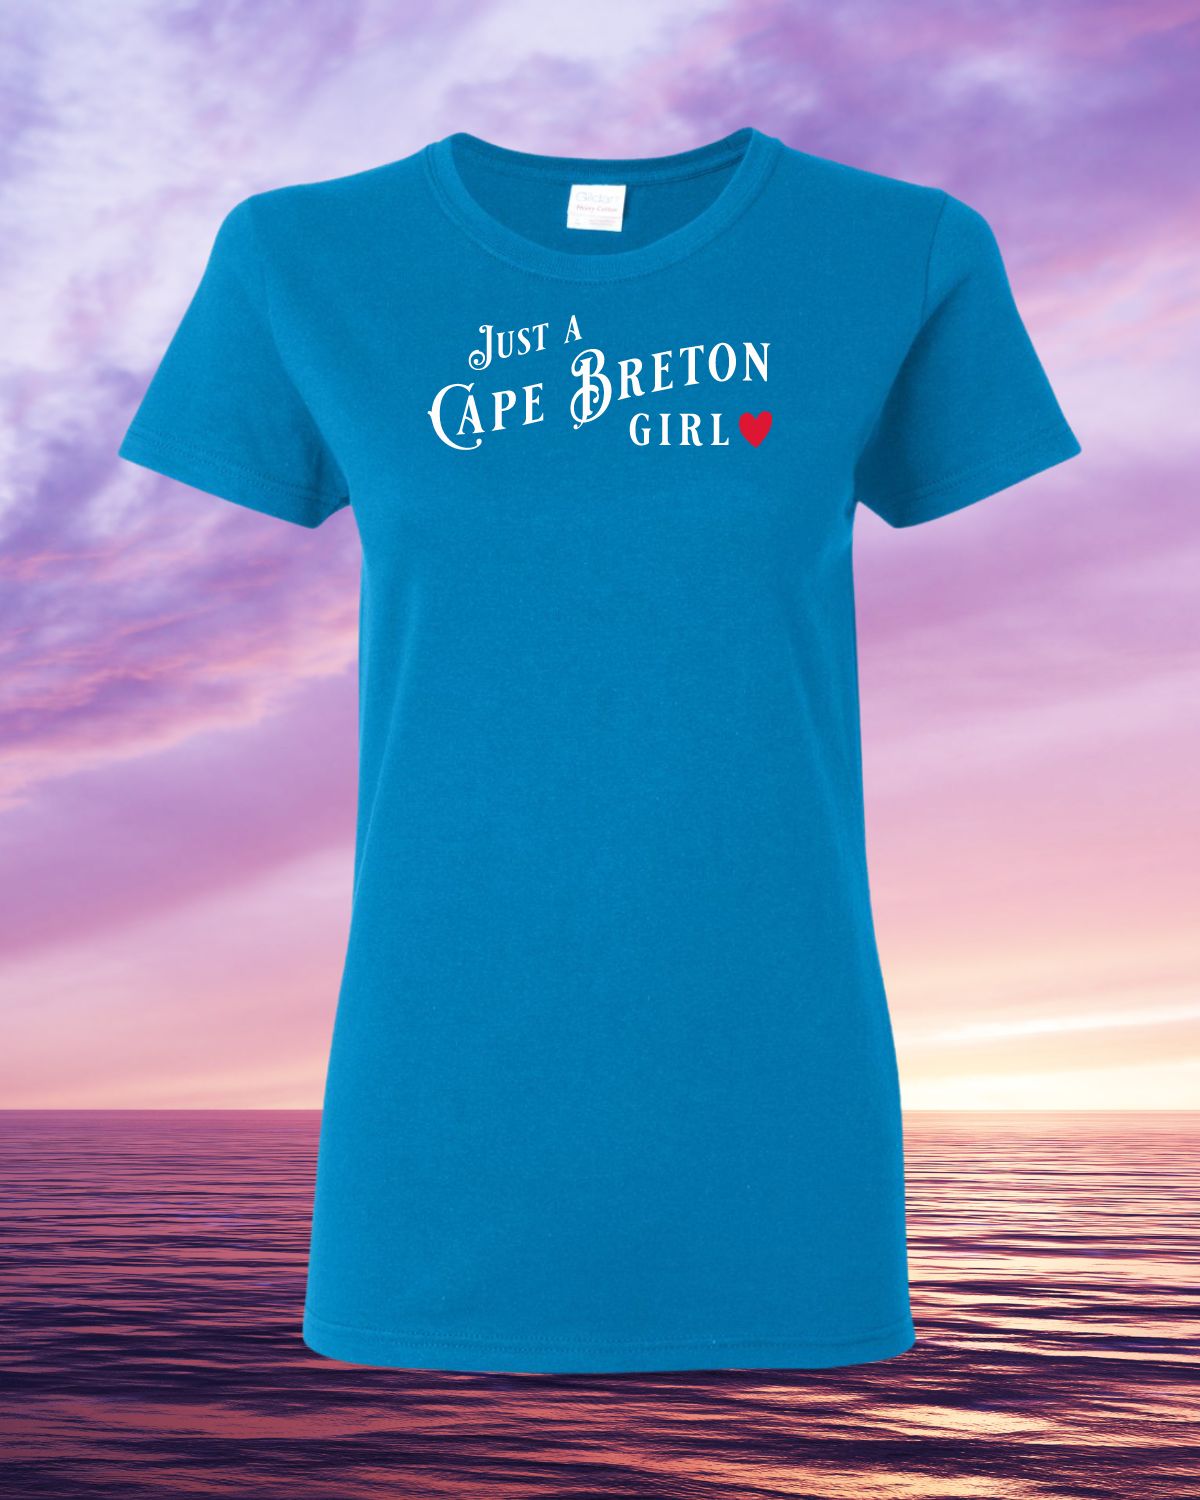 Just a Cape Breton Girl Tee